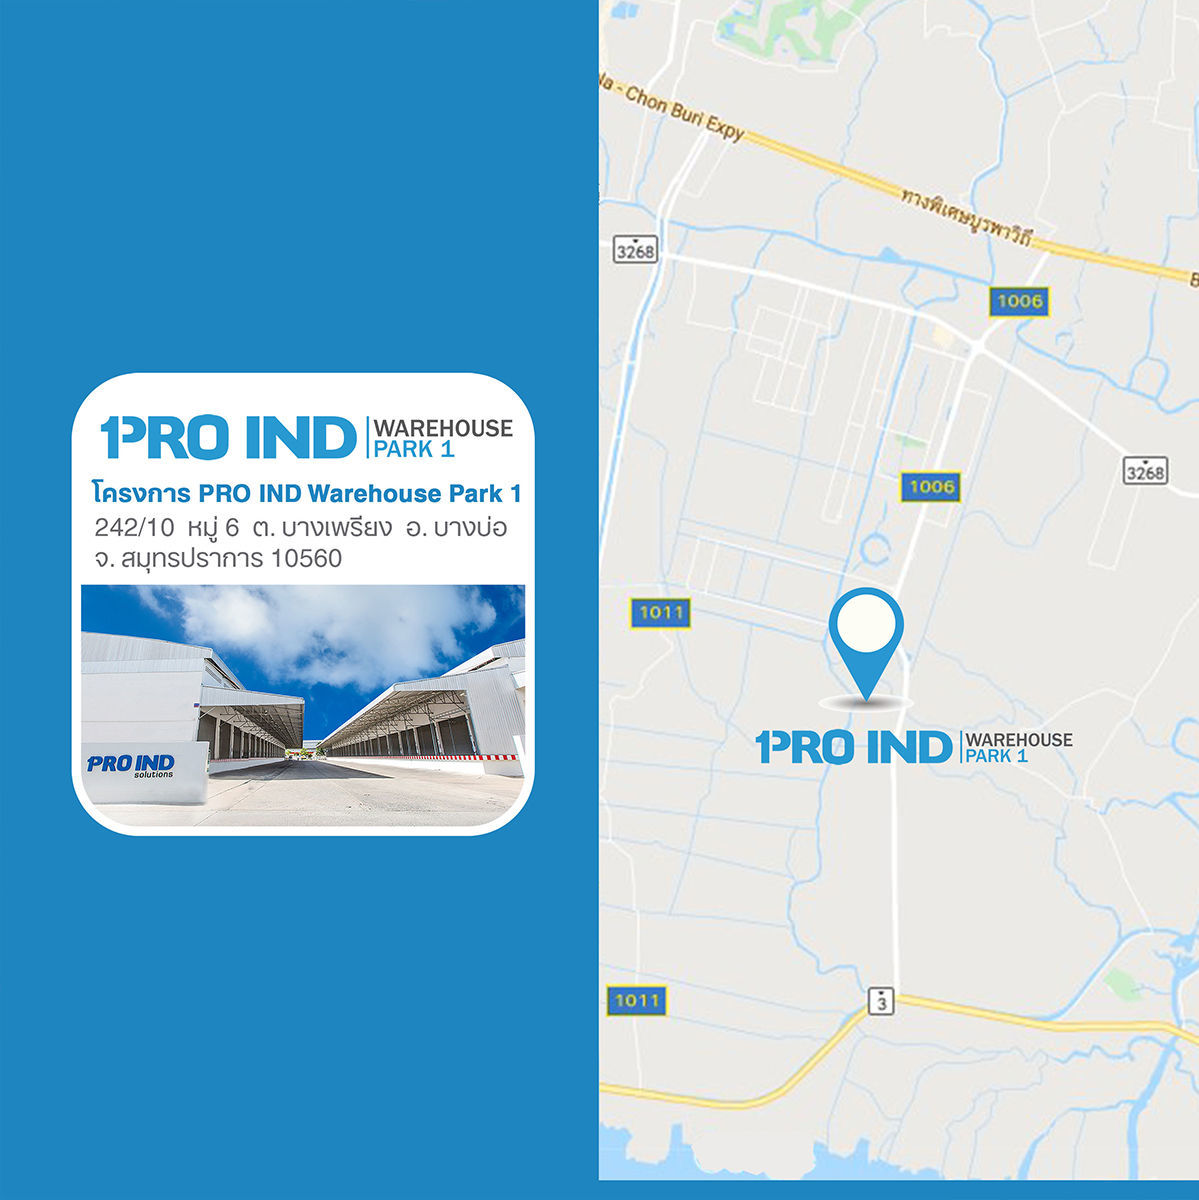 Pro Ind Warehouse Park 1 google map